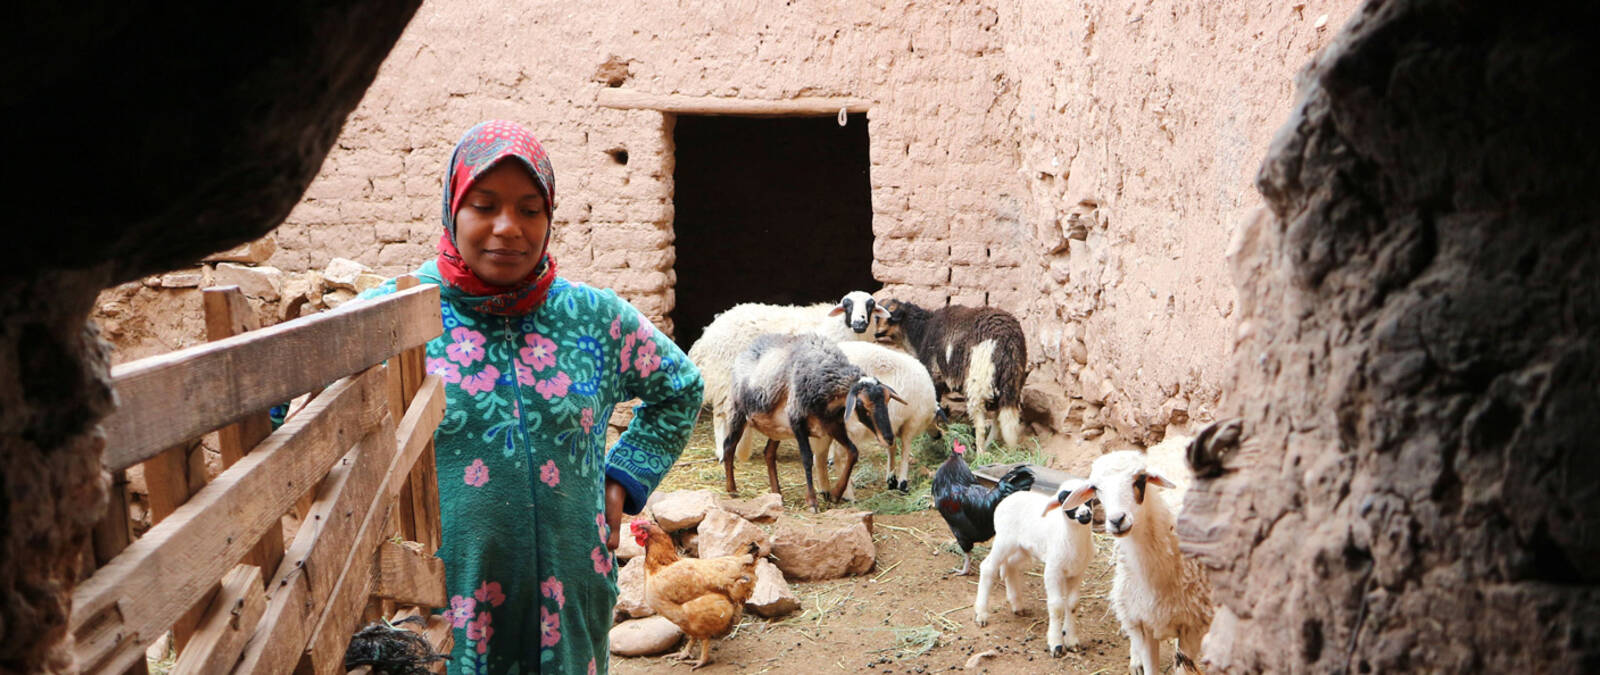 Livestock empowering women farmers